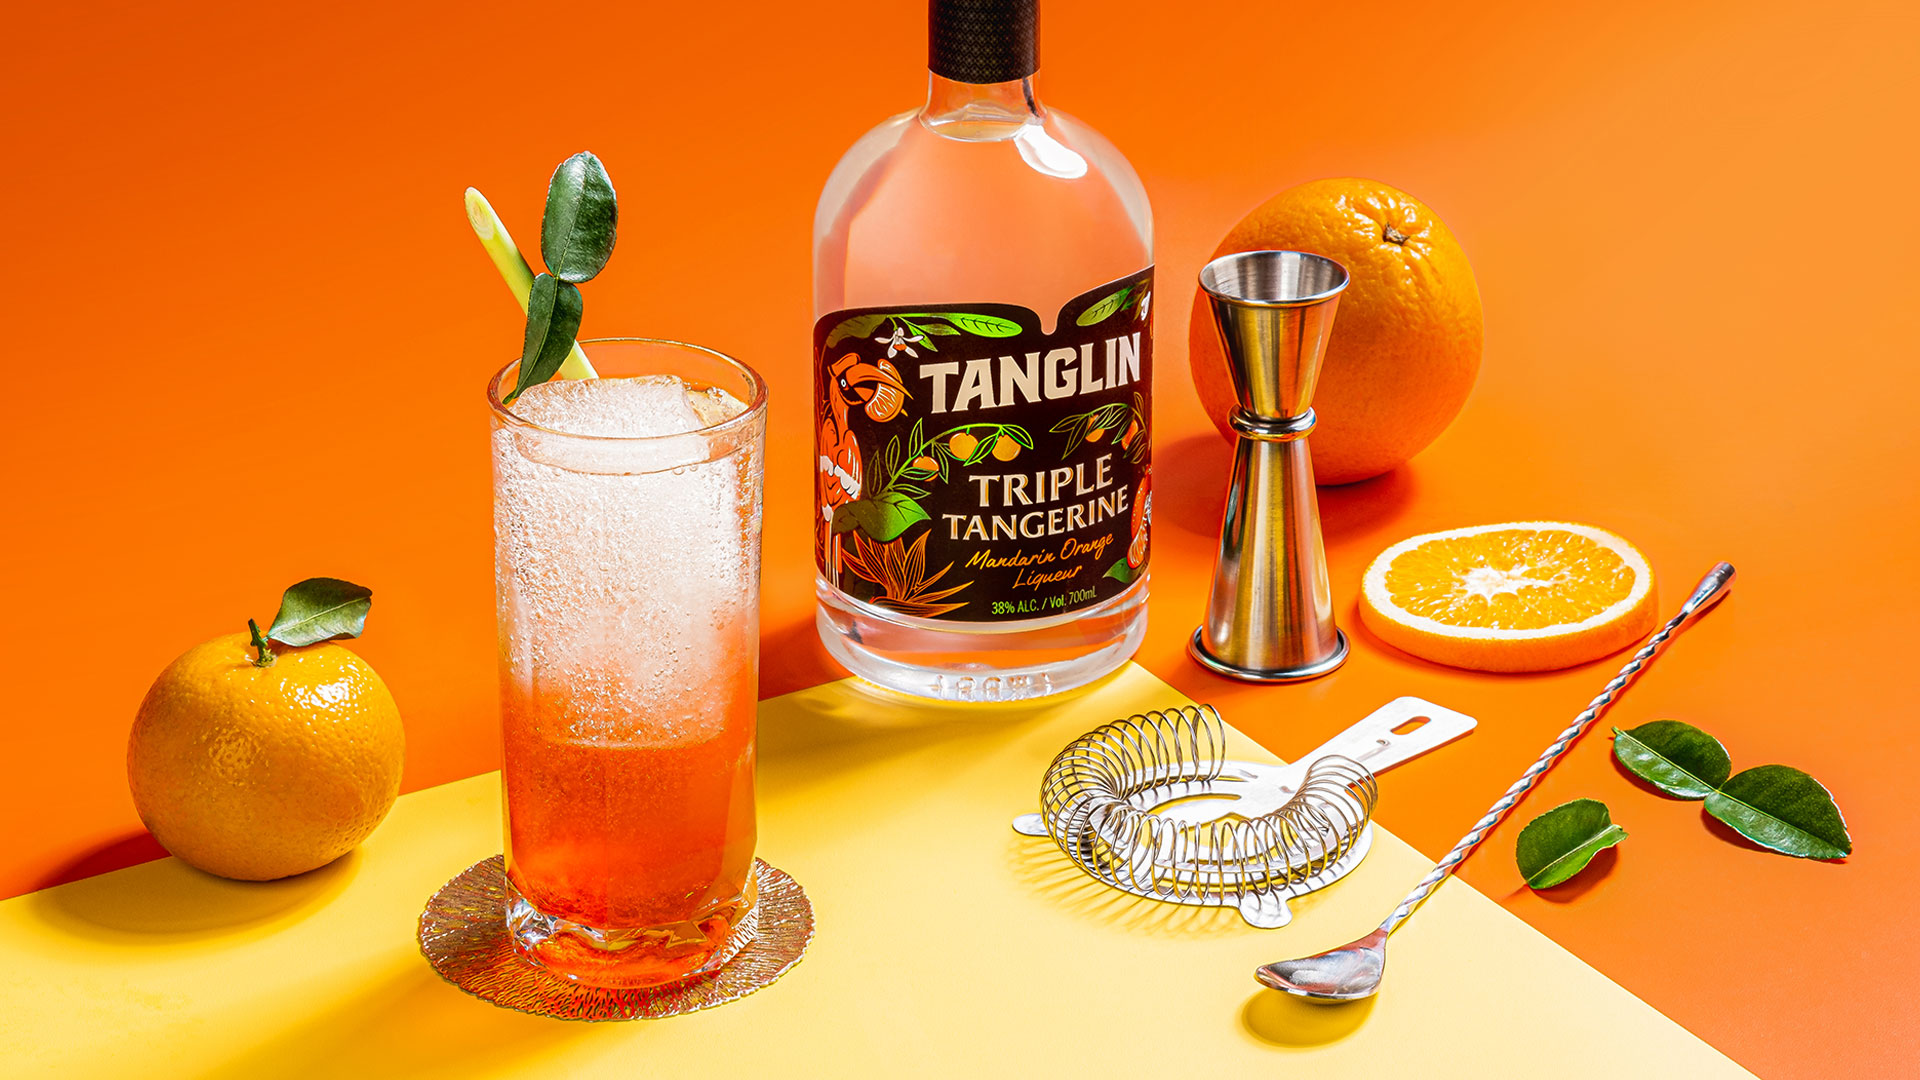 Tanglin Gin Triple Tangerine Packaging Design - World Brand Design